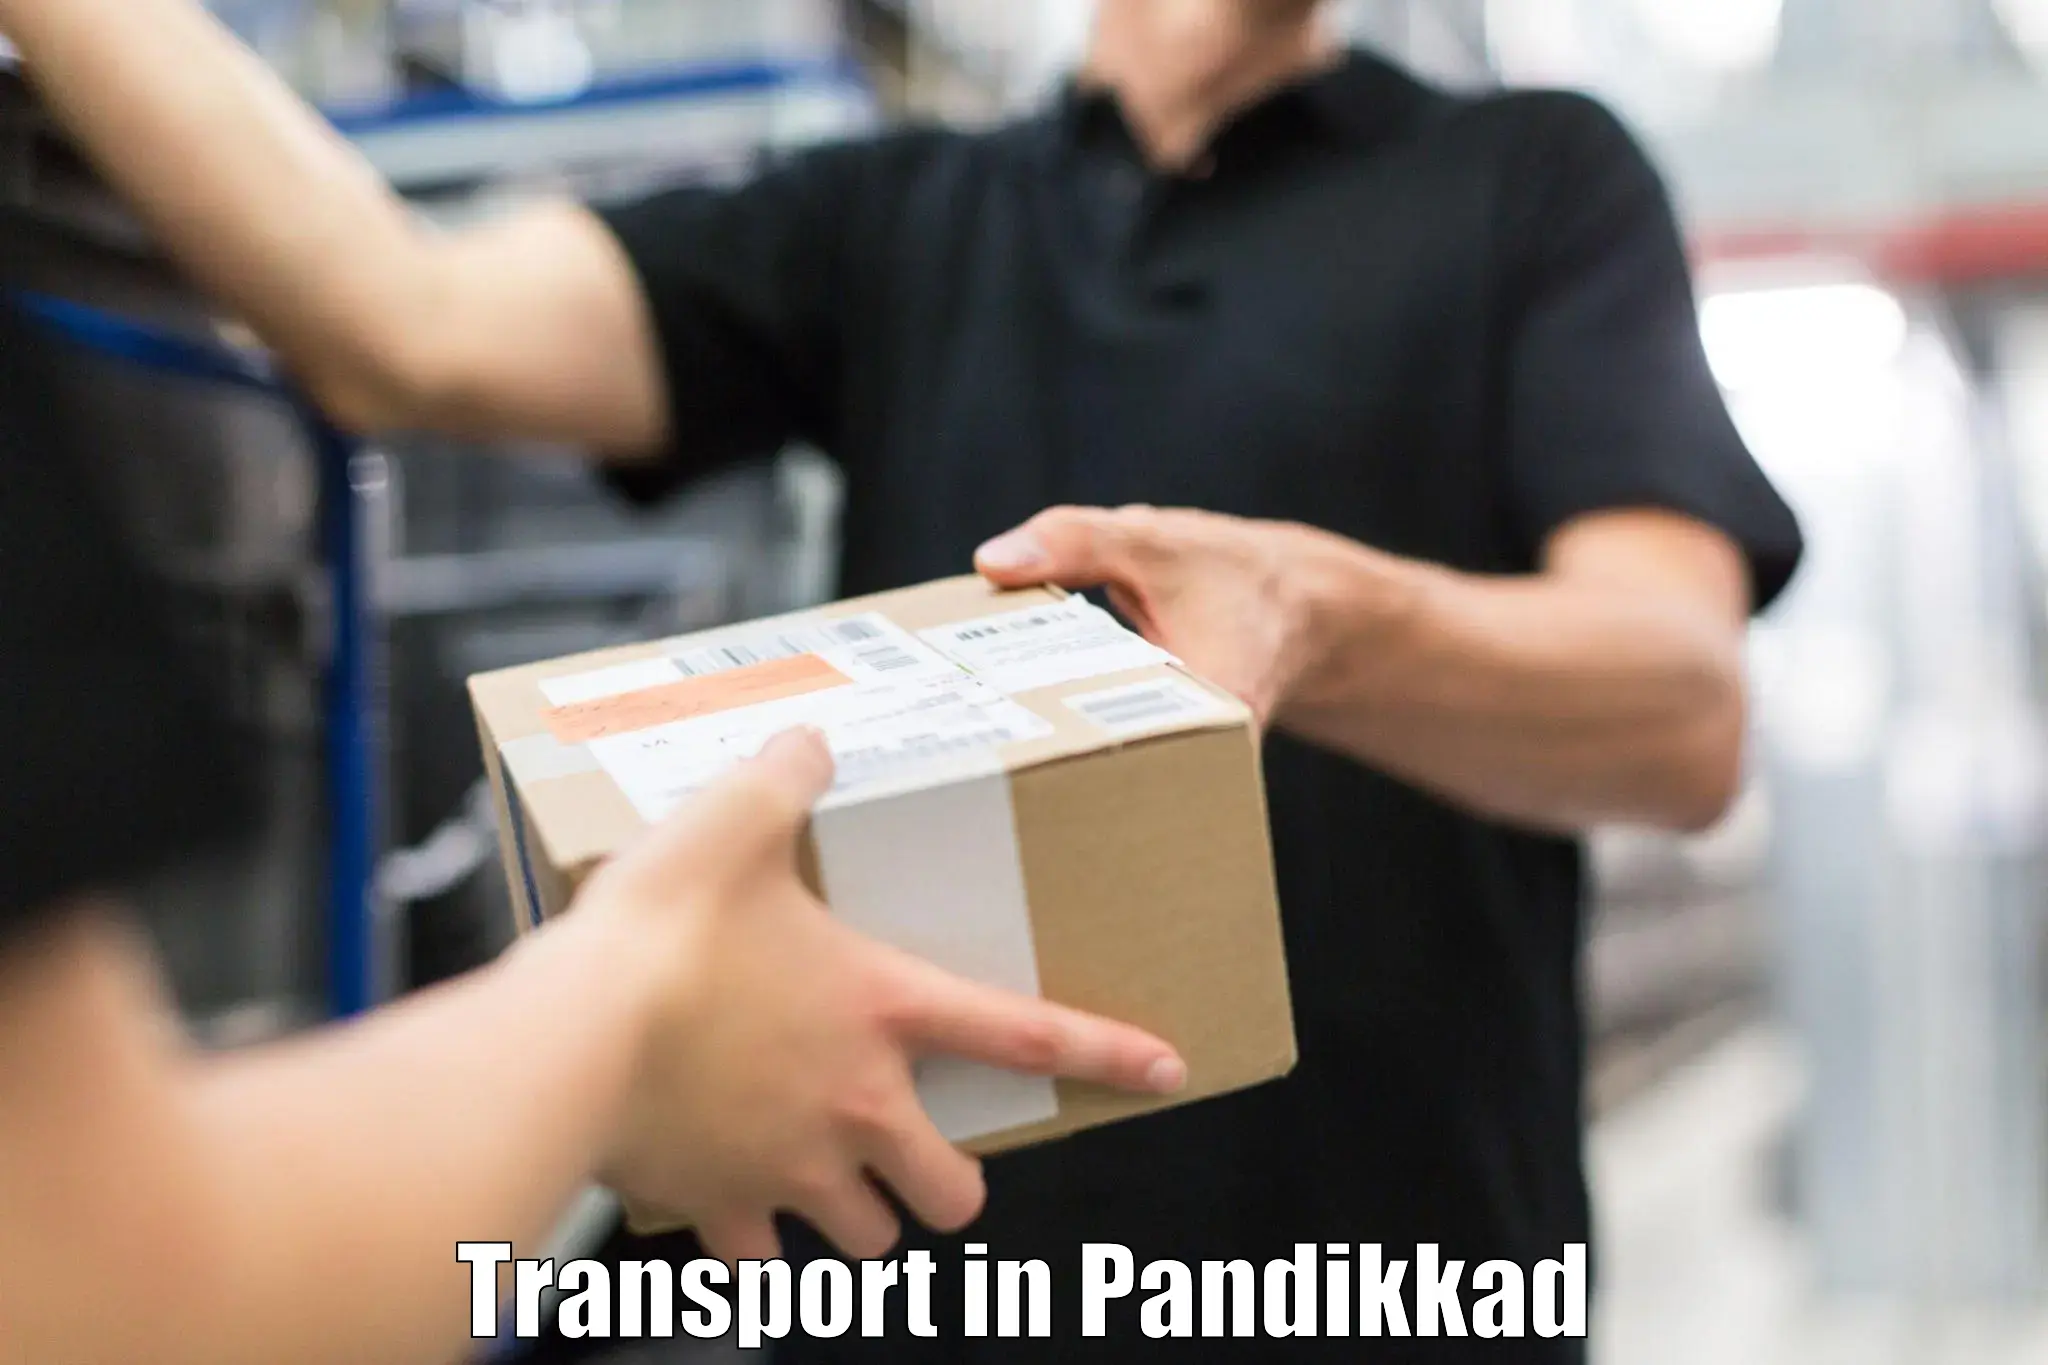 Transport services in Pandikkad